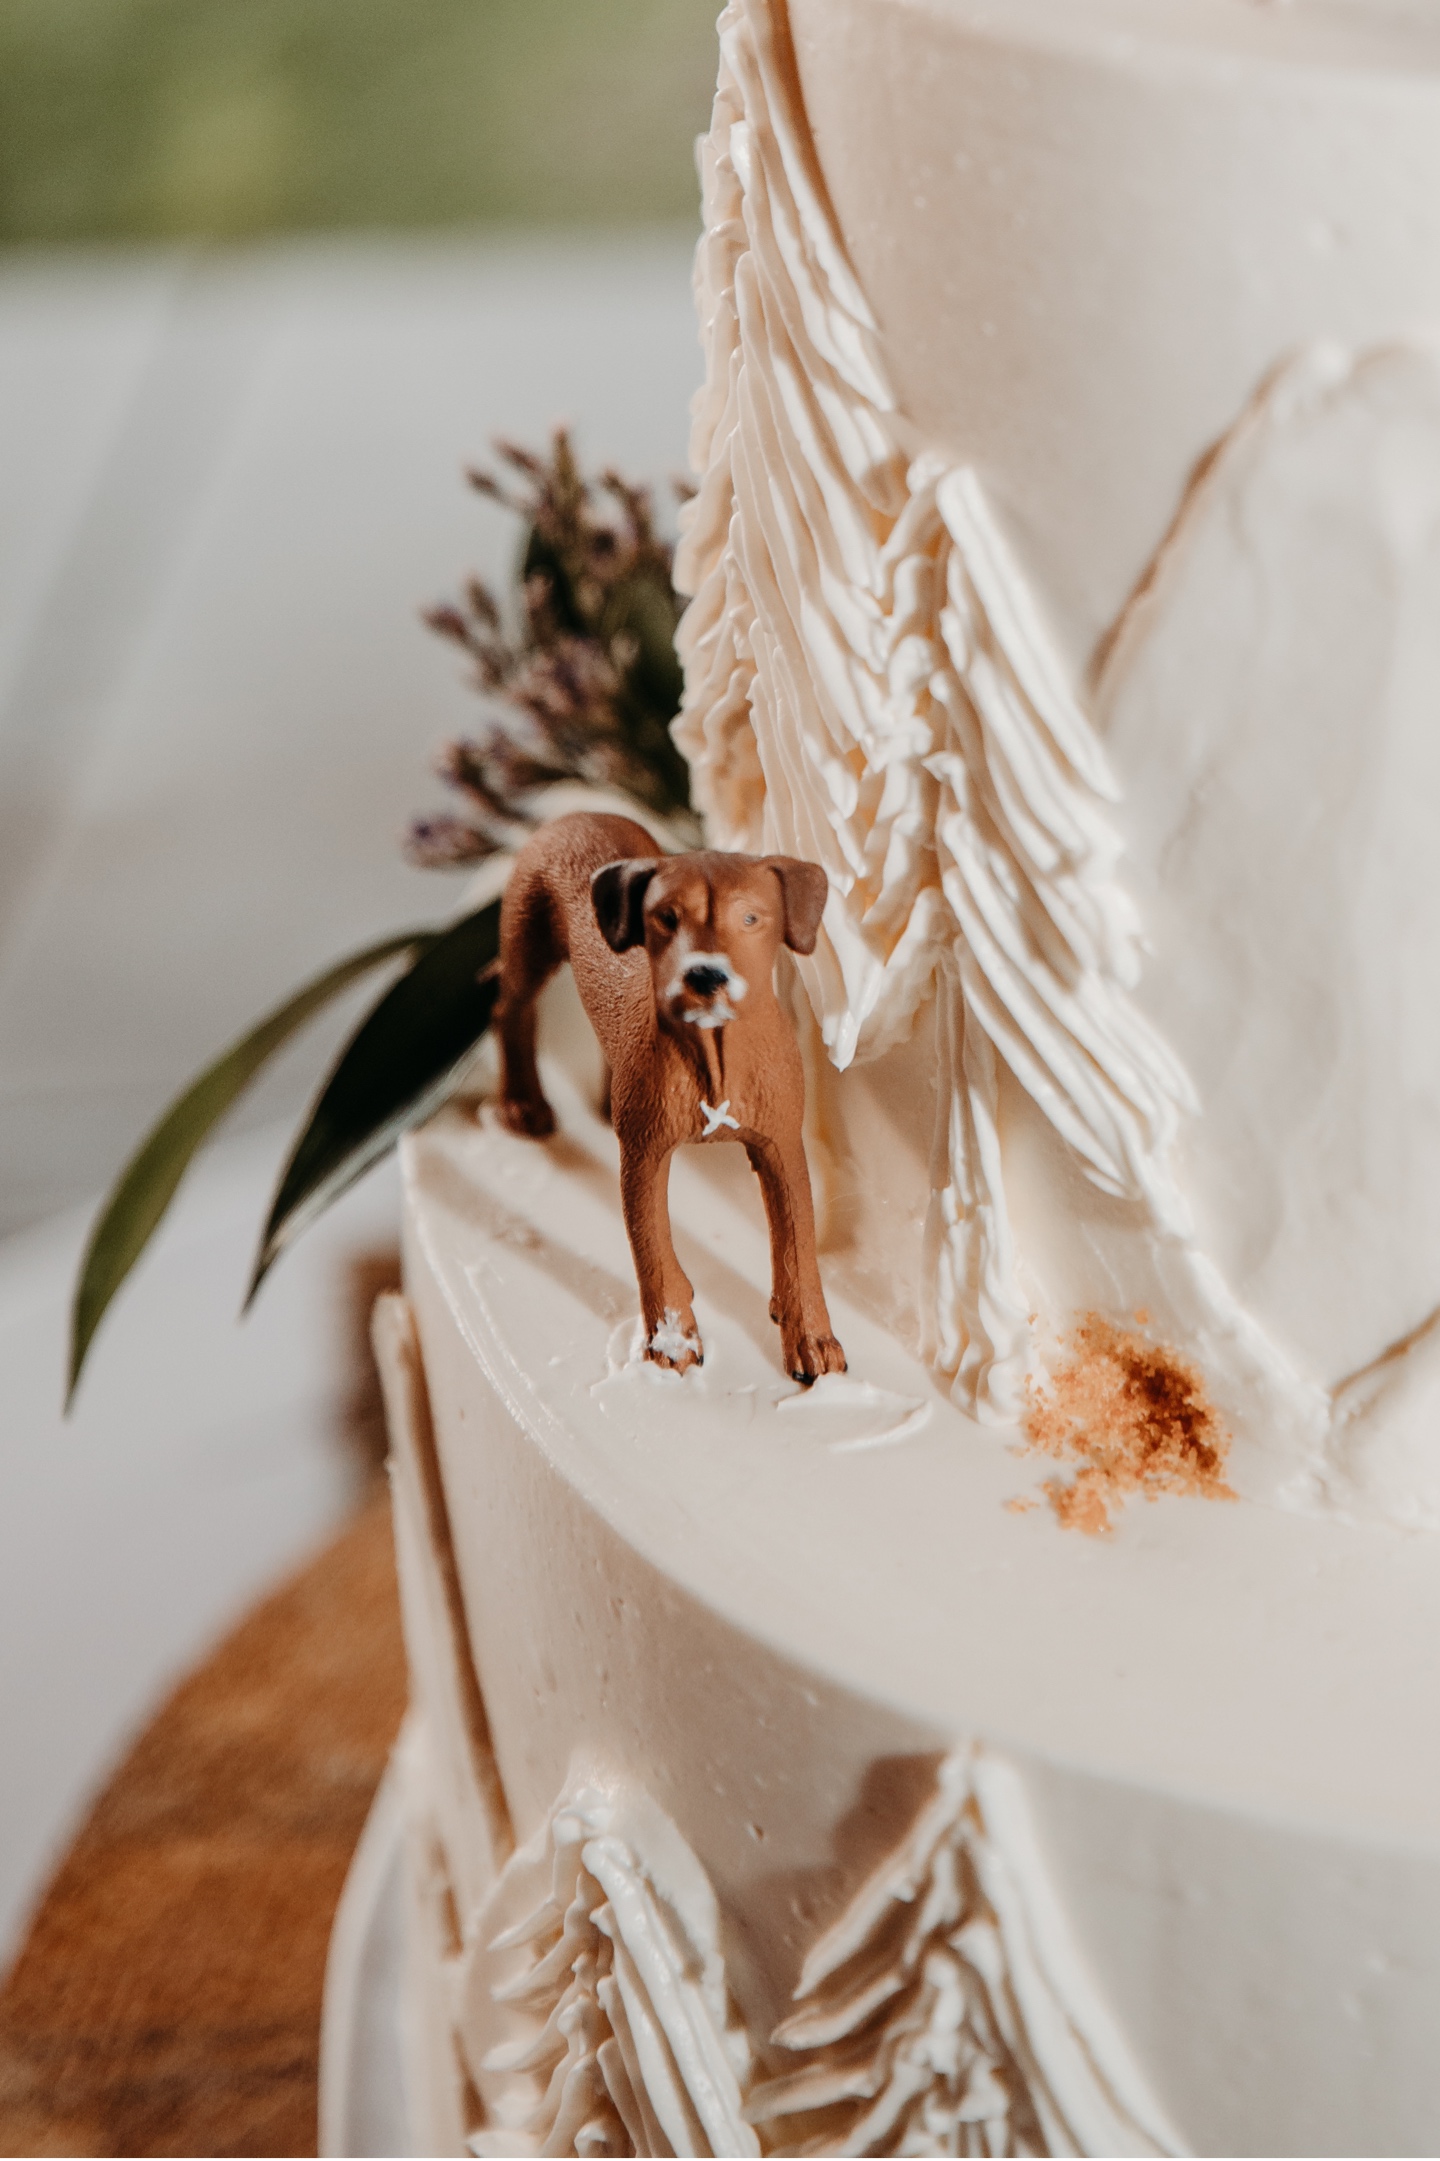 Wedding cake detail with small dog figurine